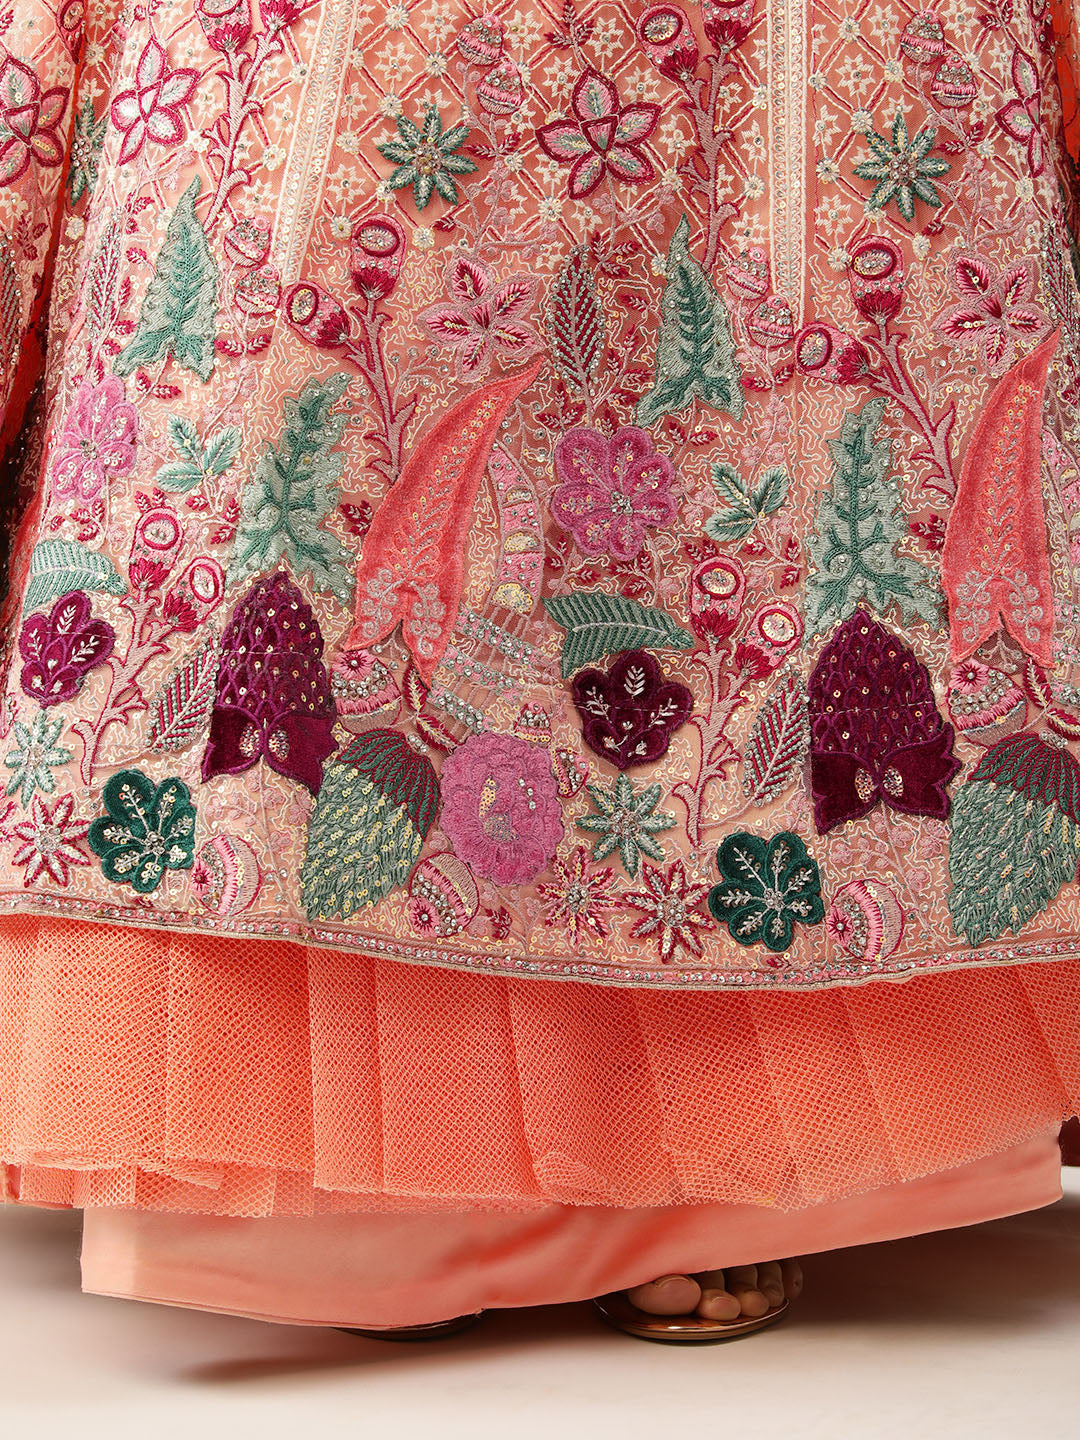 Women's Peach Net Lakhnavi Multi Colour Thread, Embroidered Lehenga & Blouse, Dupatta - Royal Dwells